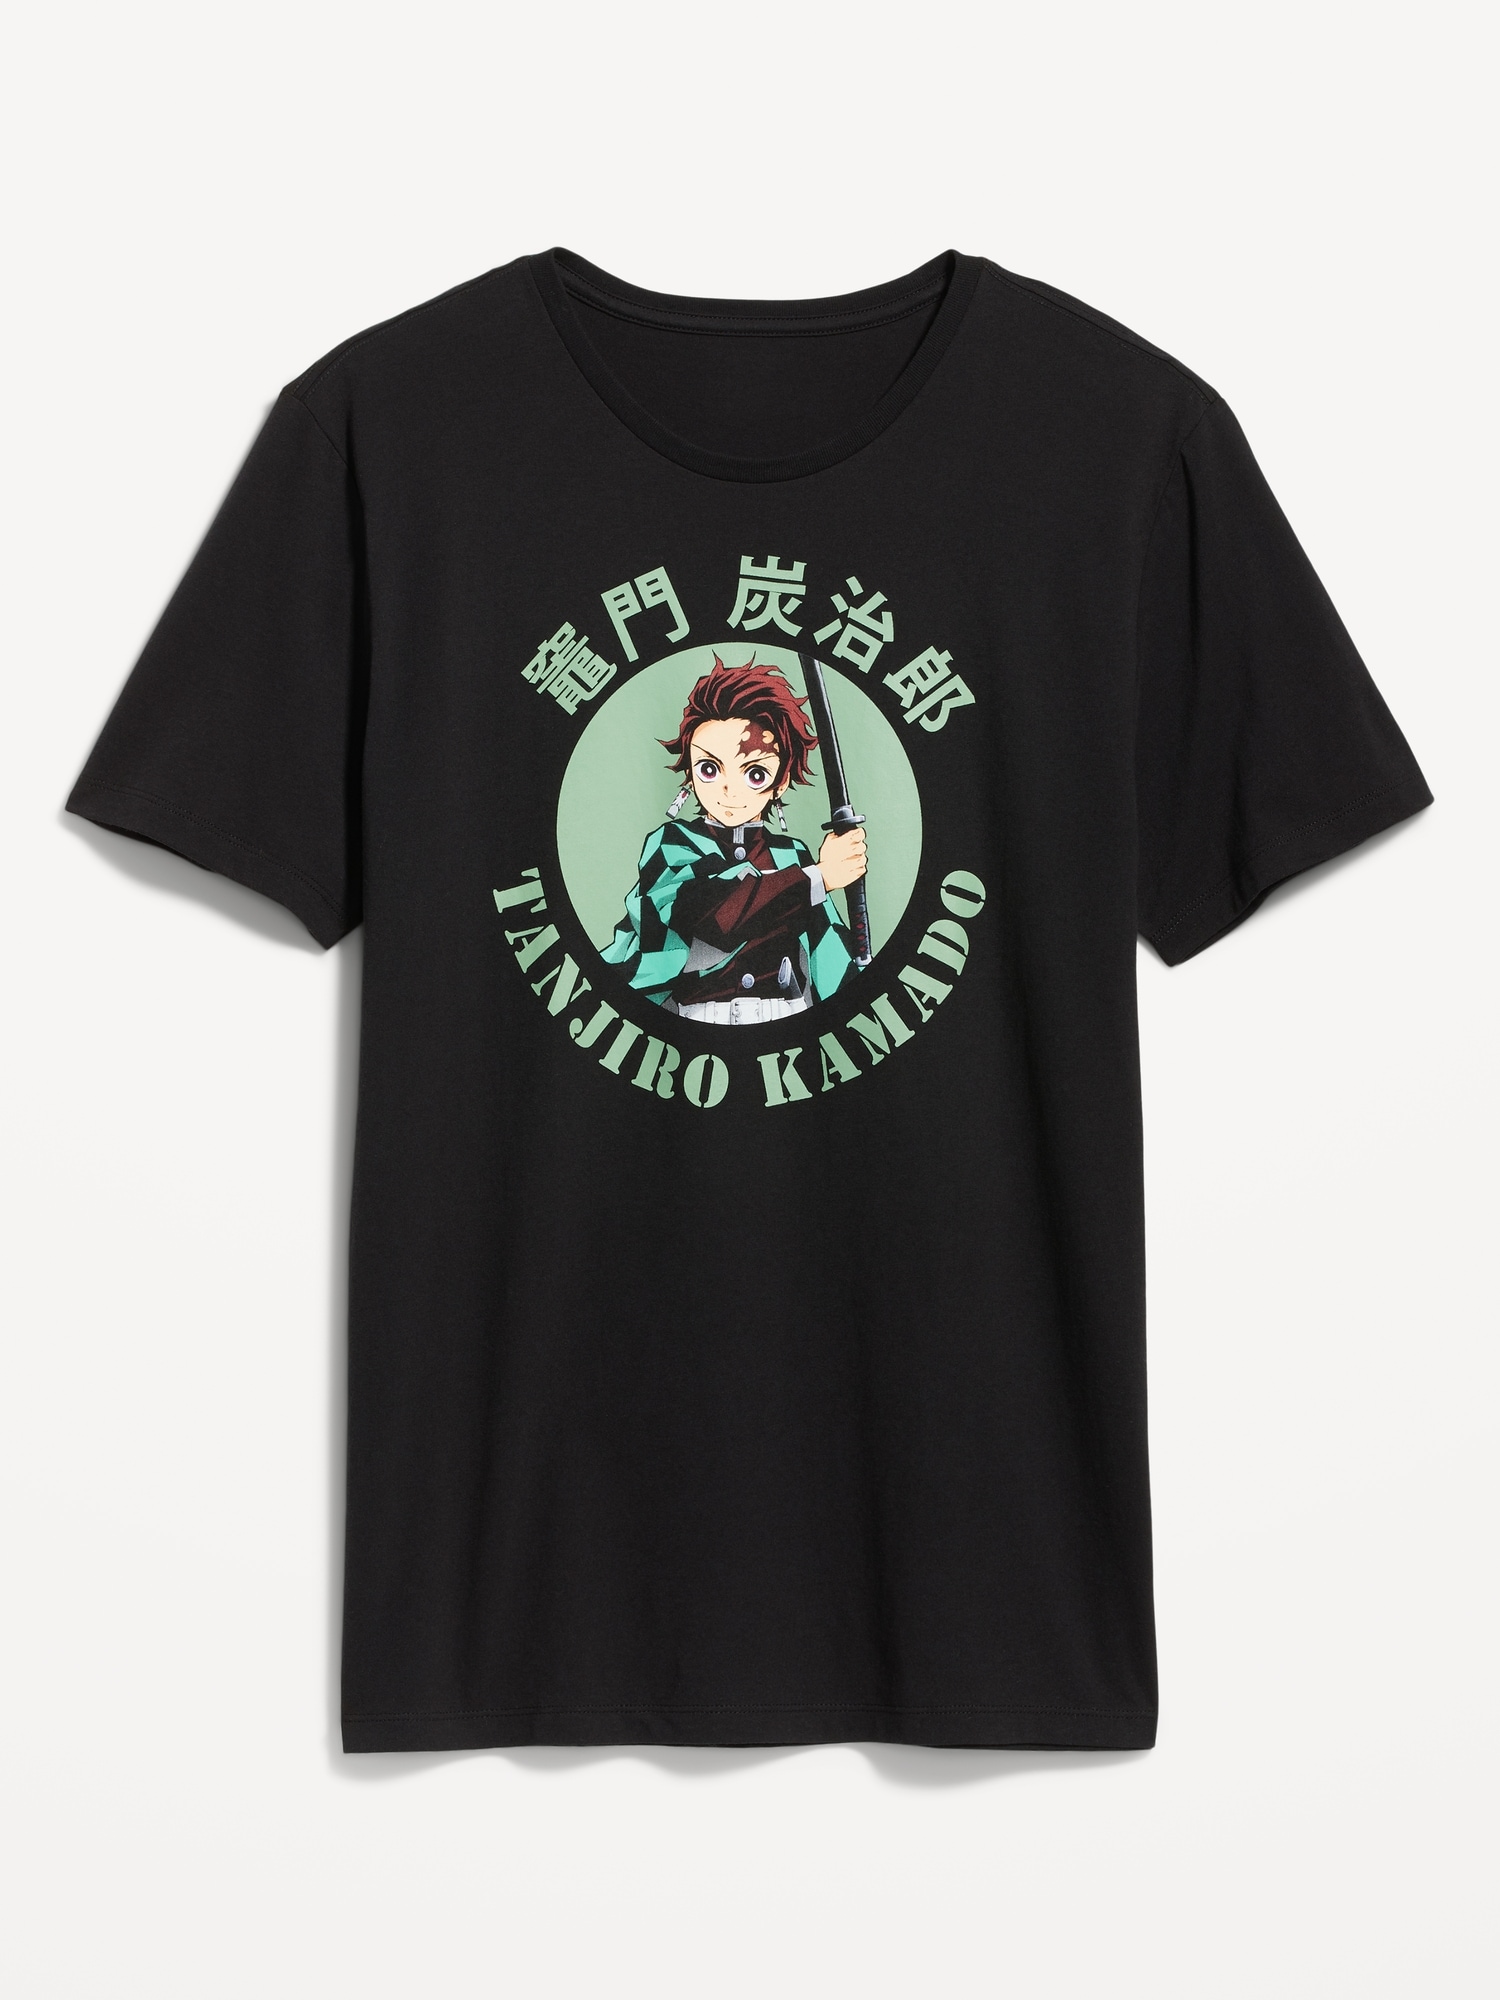 Demon Slayer: Kimetsu No Yaiba Gender-Neutral T-Shirt for Adults